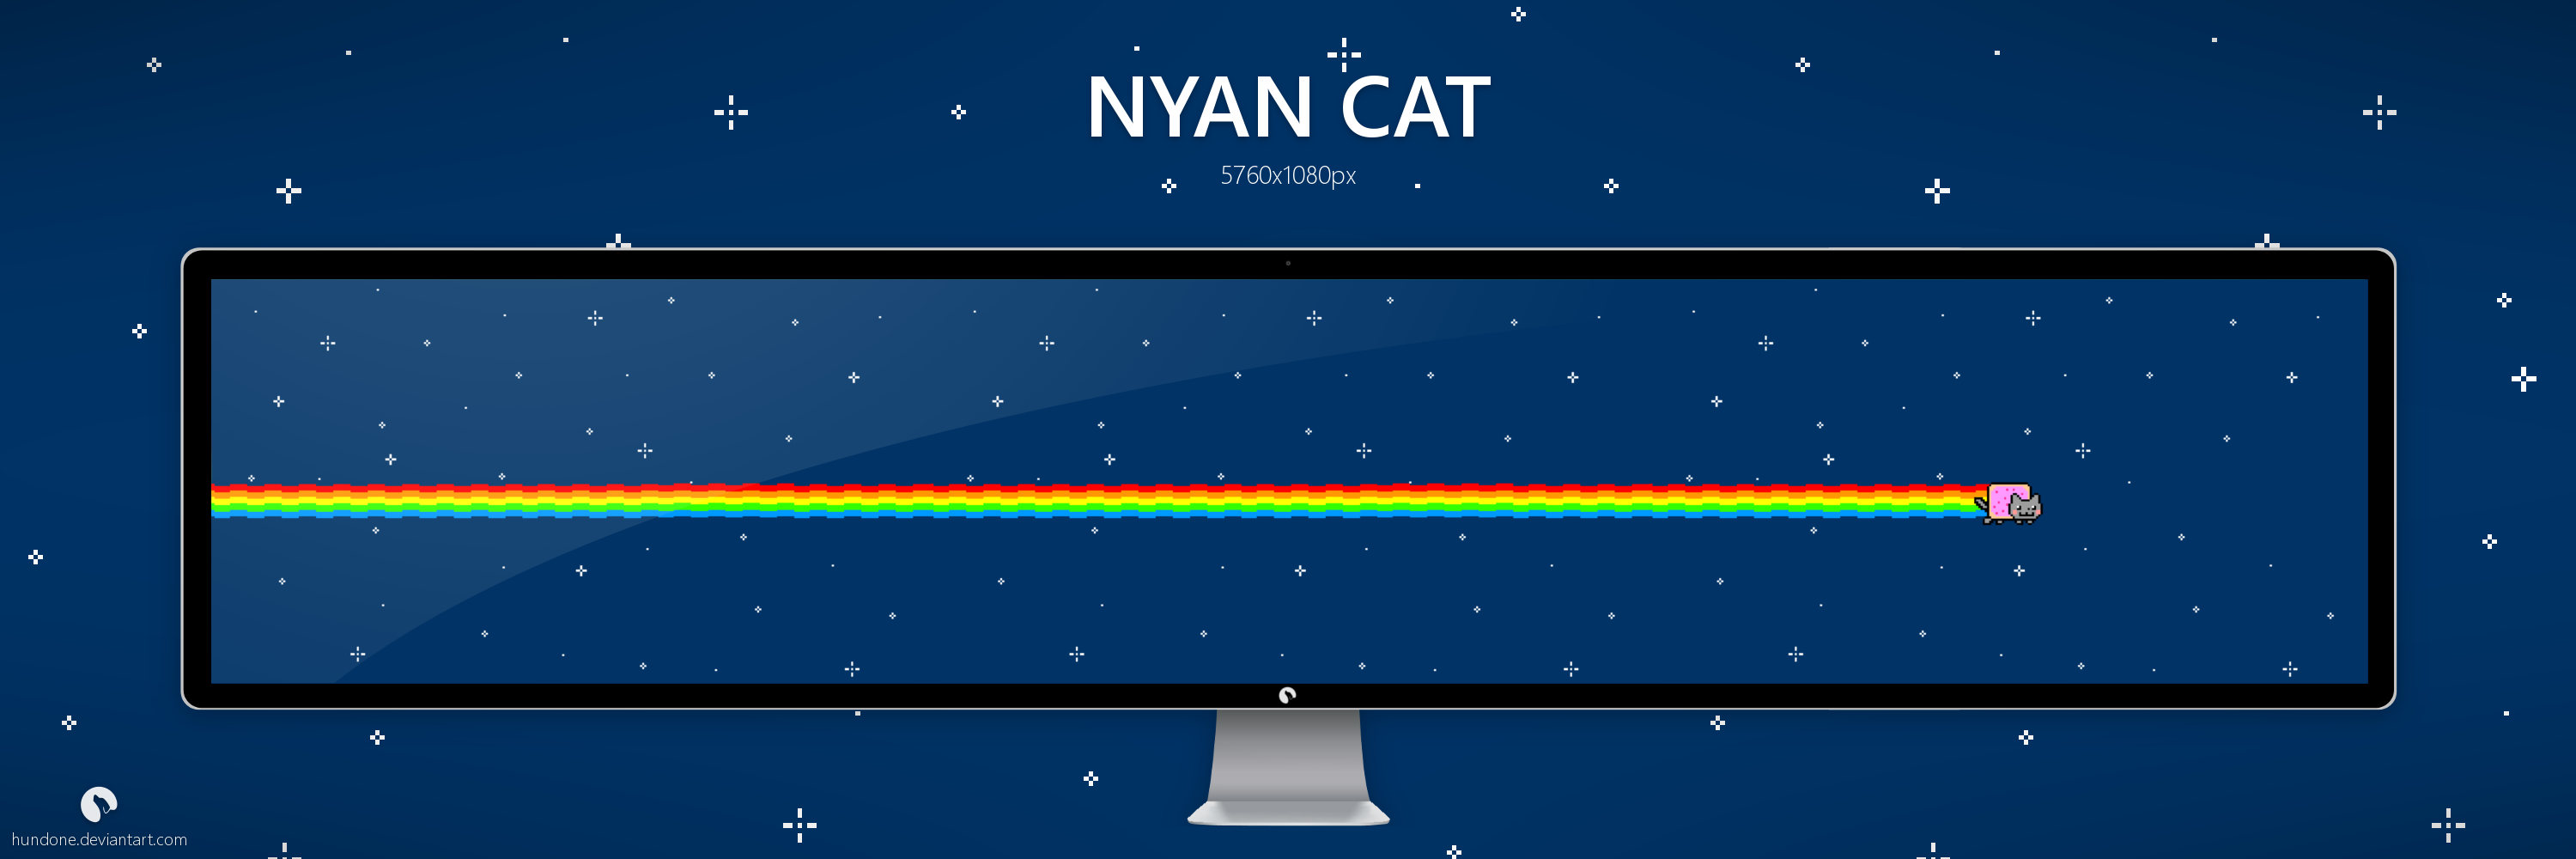 Nyan Cat by hundone on DeviantArt